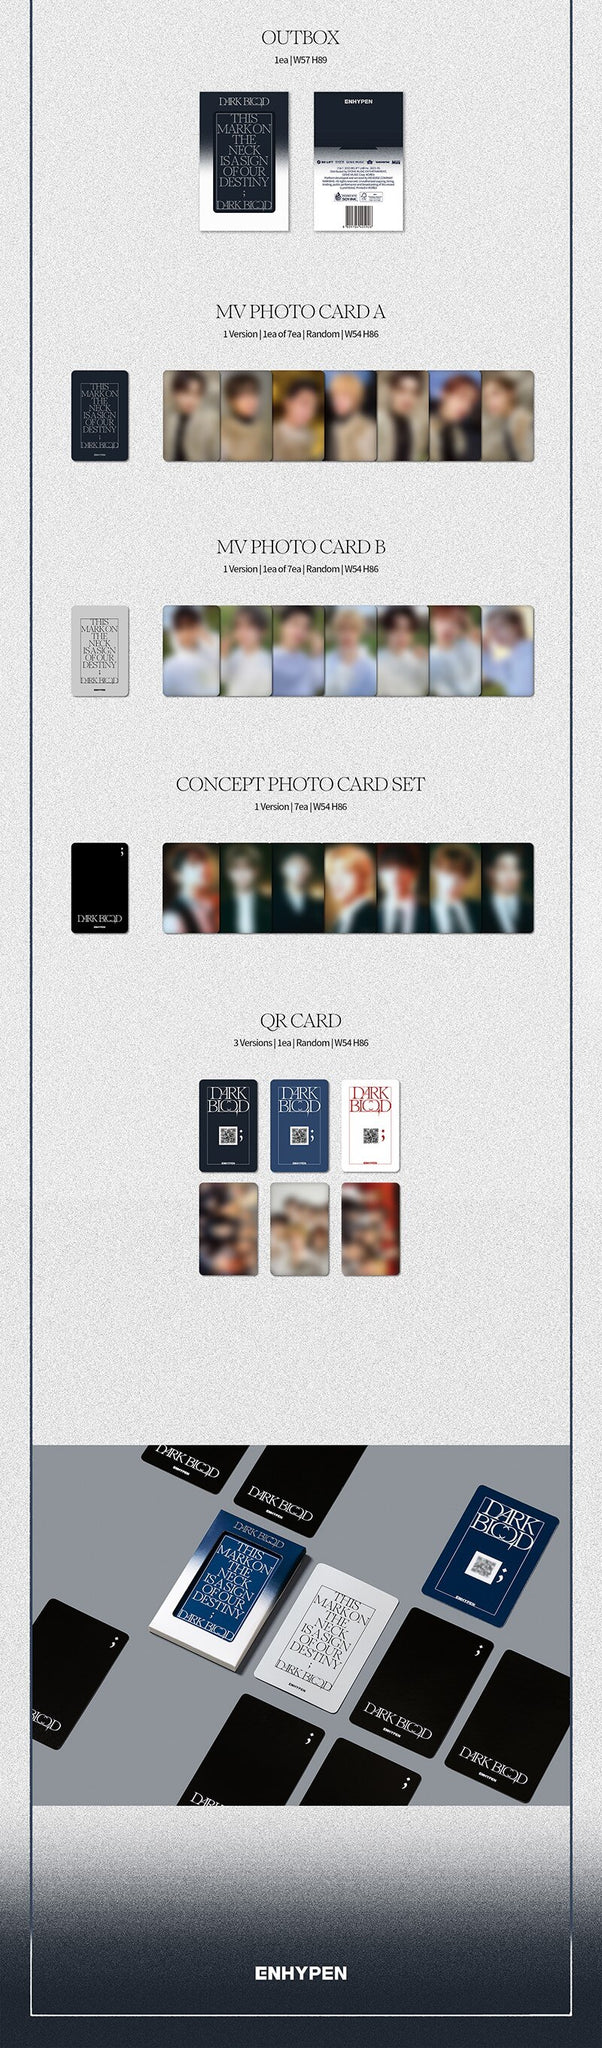 ENHYPEN DARK BLOOD - Weverse Albums Version Inclusions Out Box MV Photocard A MV Photocard B Concept Photocard Set QR Card 